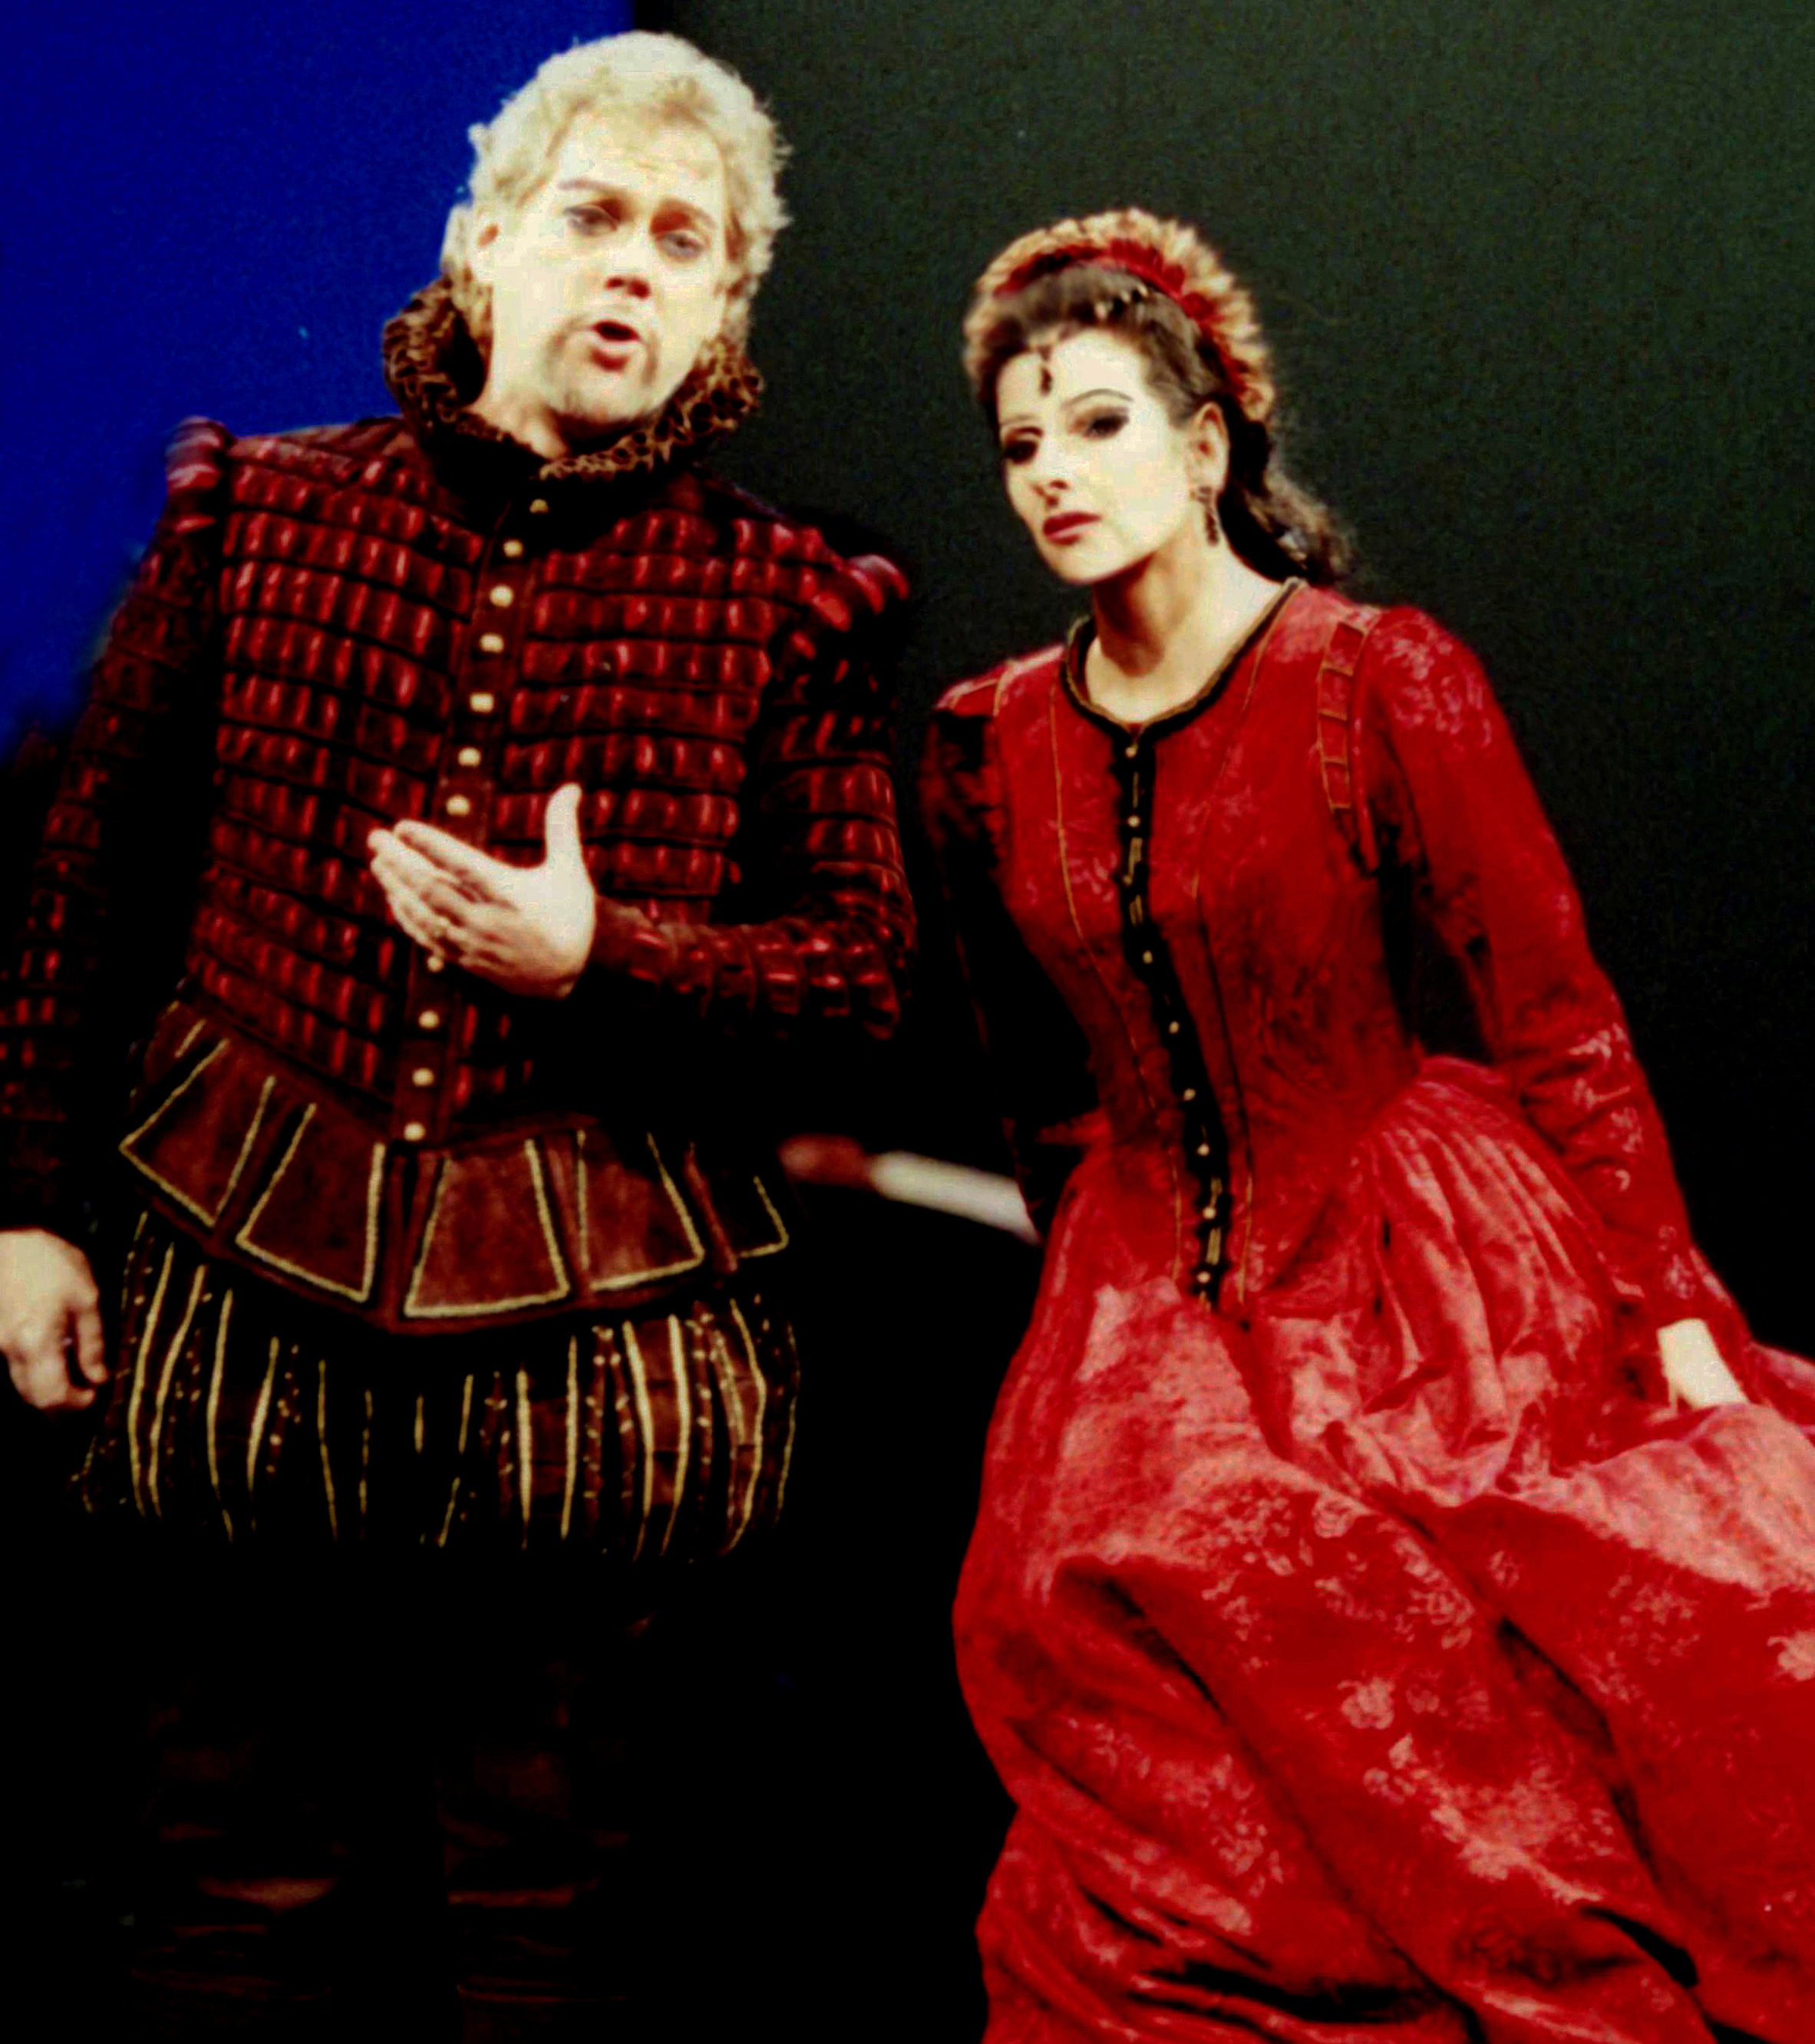 Lucia Aliberti with the American tenor Gregory Kunde⚘Deutsche Oper Berlin⚘Berlin⚘Opera⚘"Anna Bolena"⚘On Stage⚘Photo taken from the TV News⚘TV Portrait⚘:http://www.luciaaliberti.it #luciaaliberti #gregorykunde #deutscheoperberlin #berlin #annabolena #opera #onstage #tvnews #tvportrait